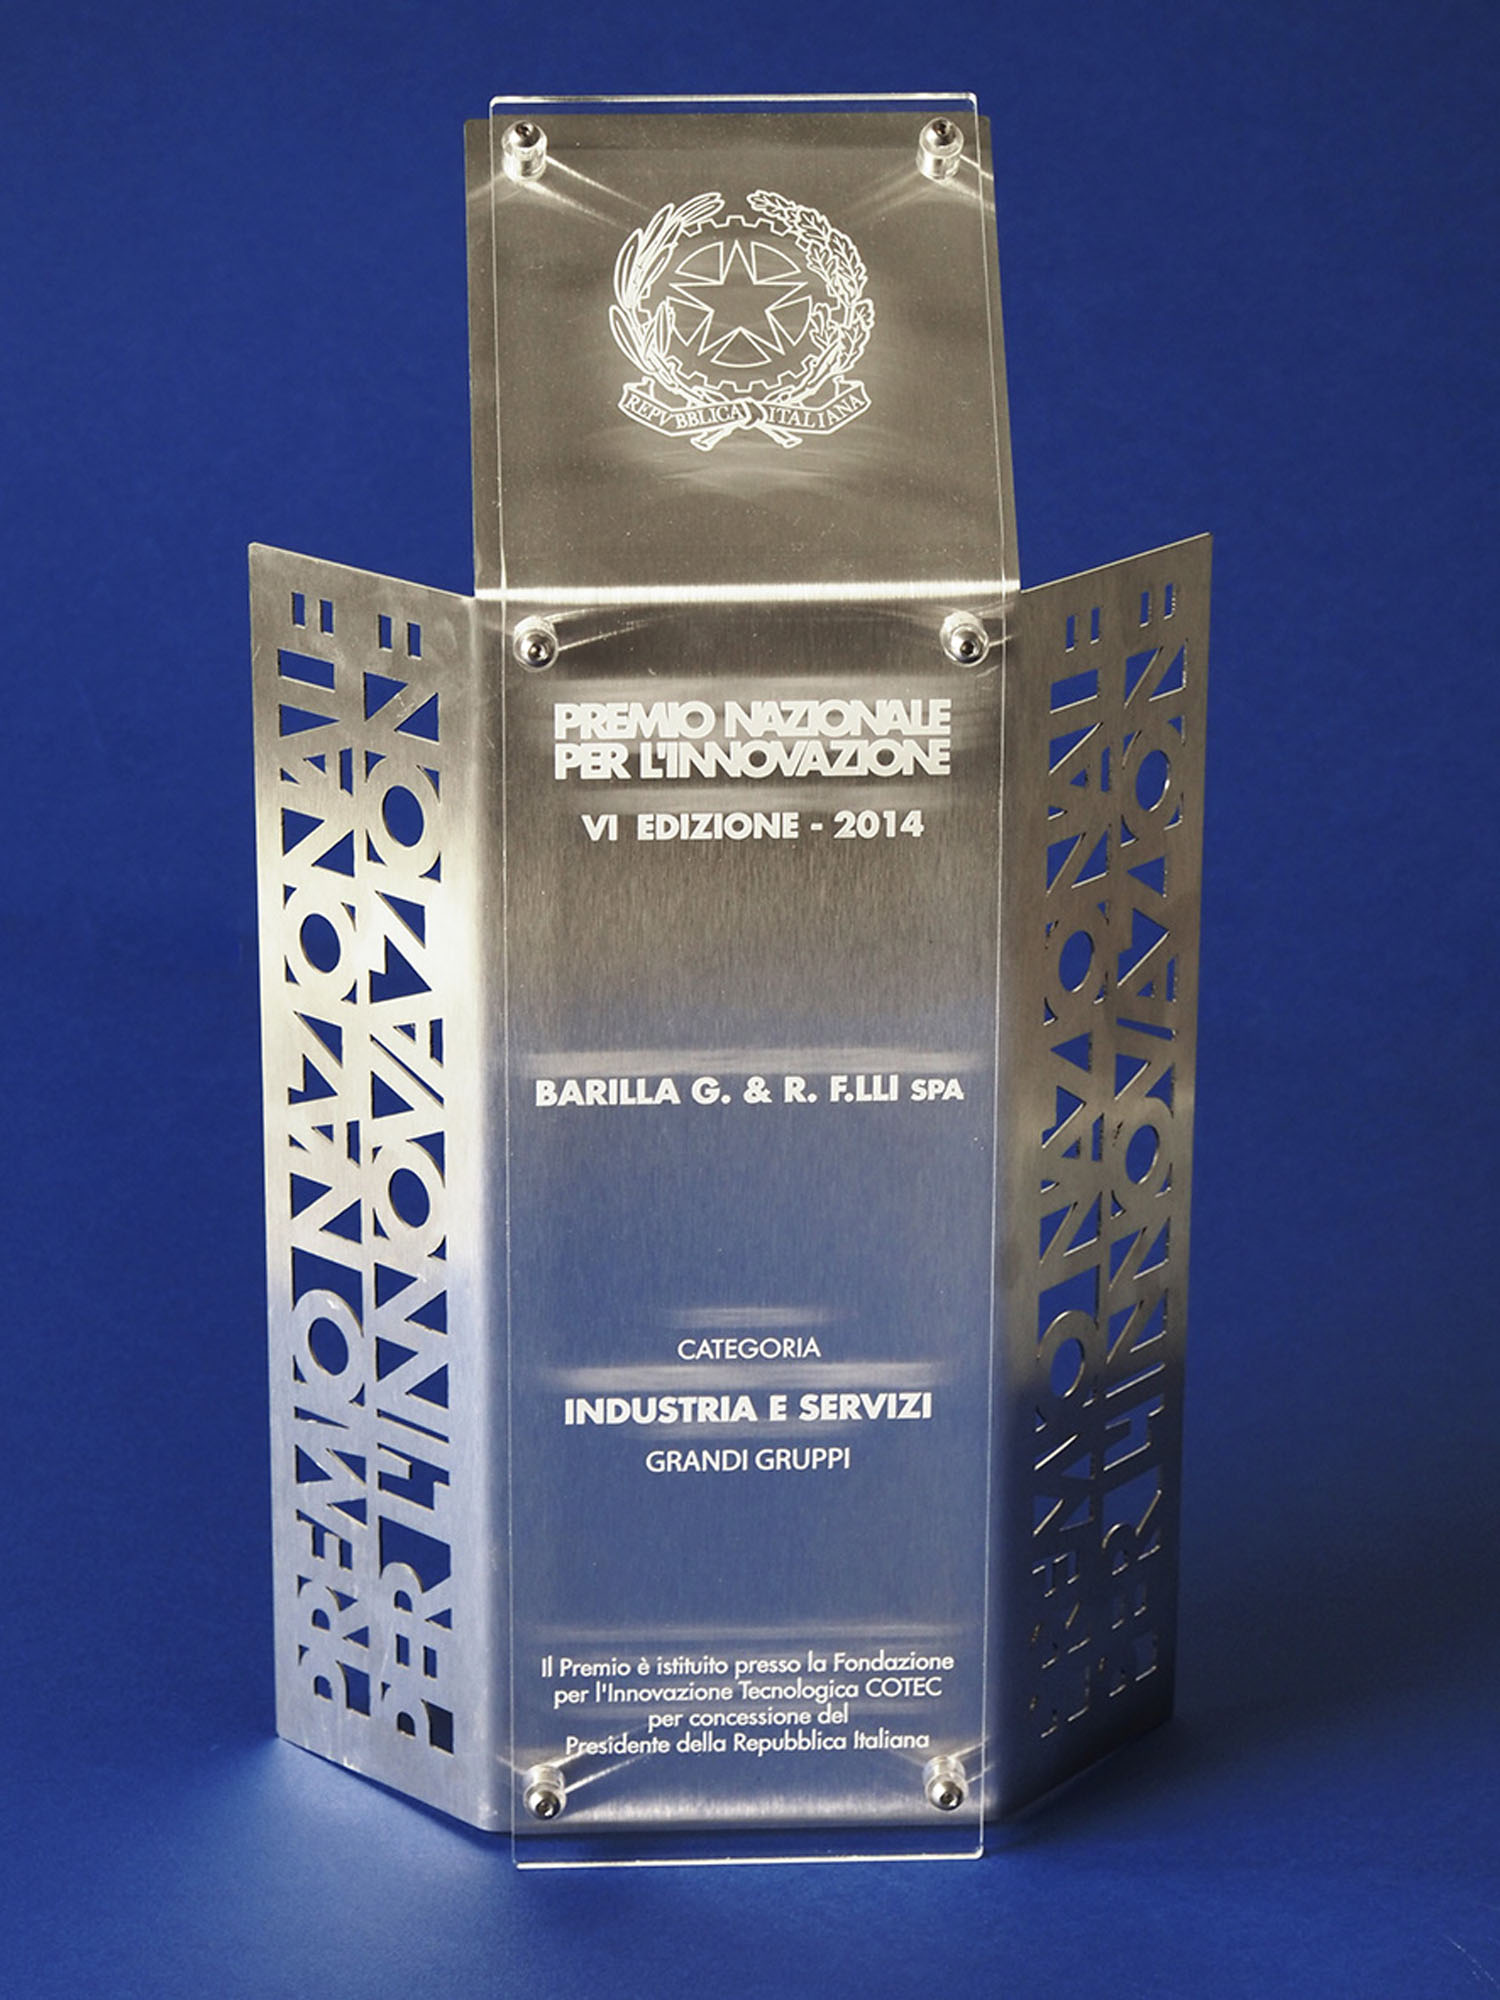 2014 - National Awards for Innovation. VI edition, Technological Innovation COTEC Foundation